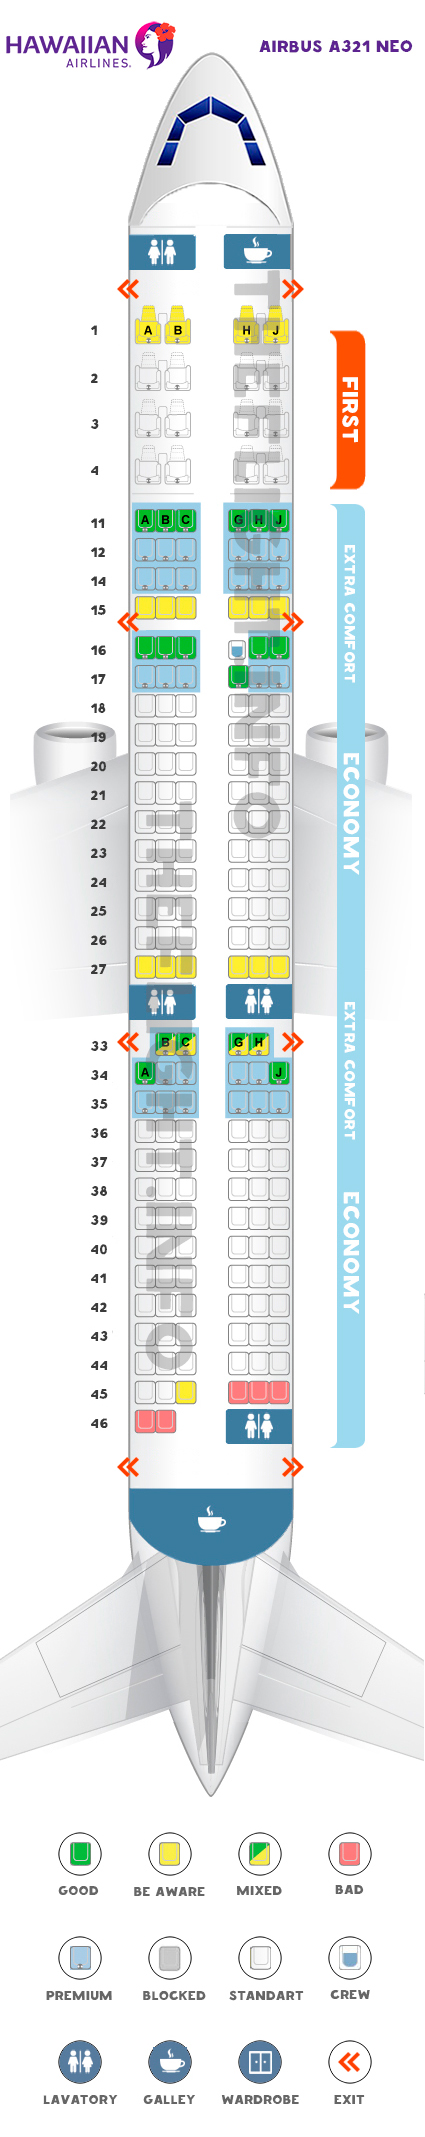 Hawaiian Airlines Seating Chart